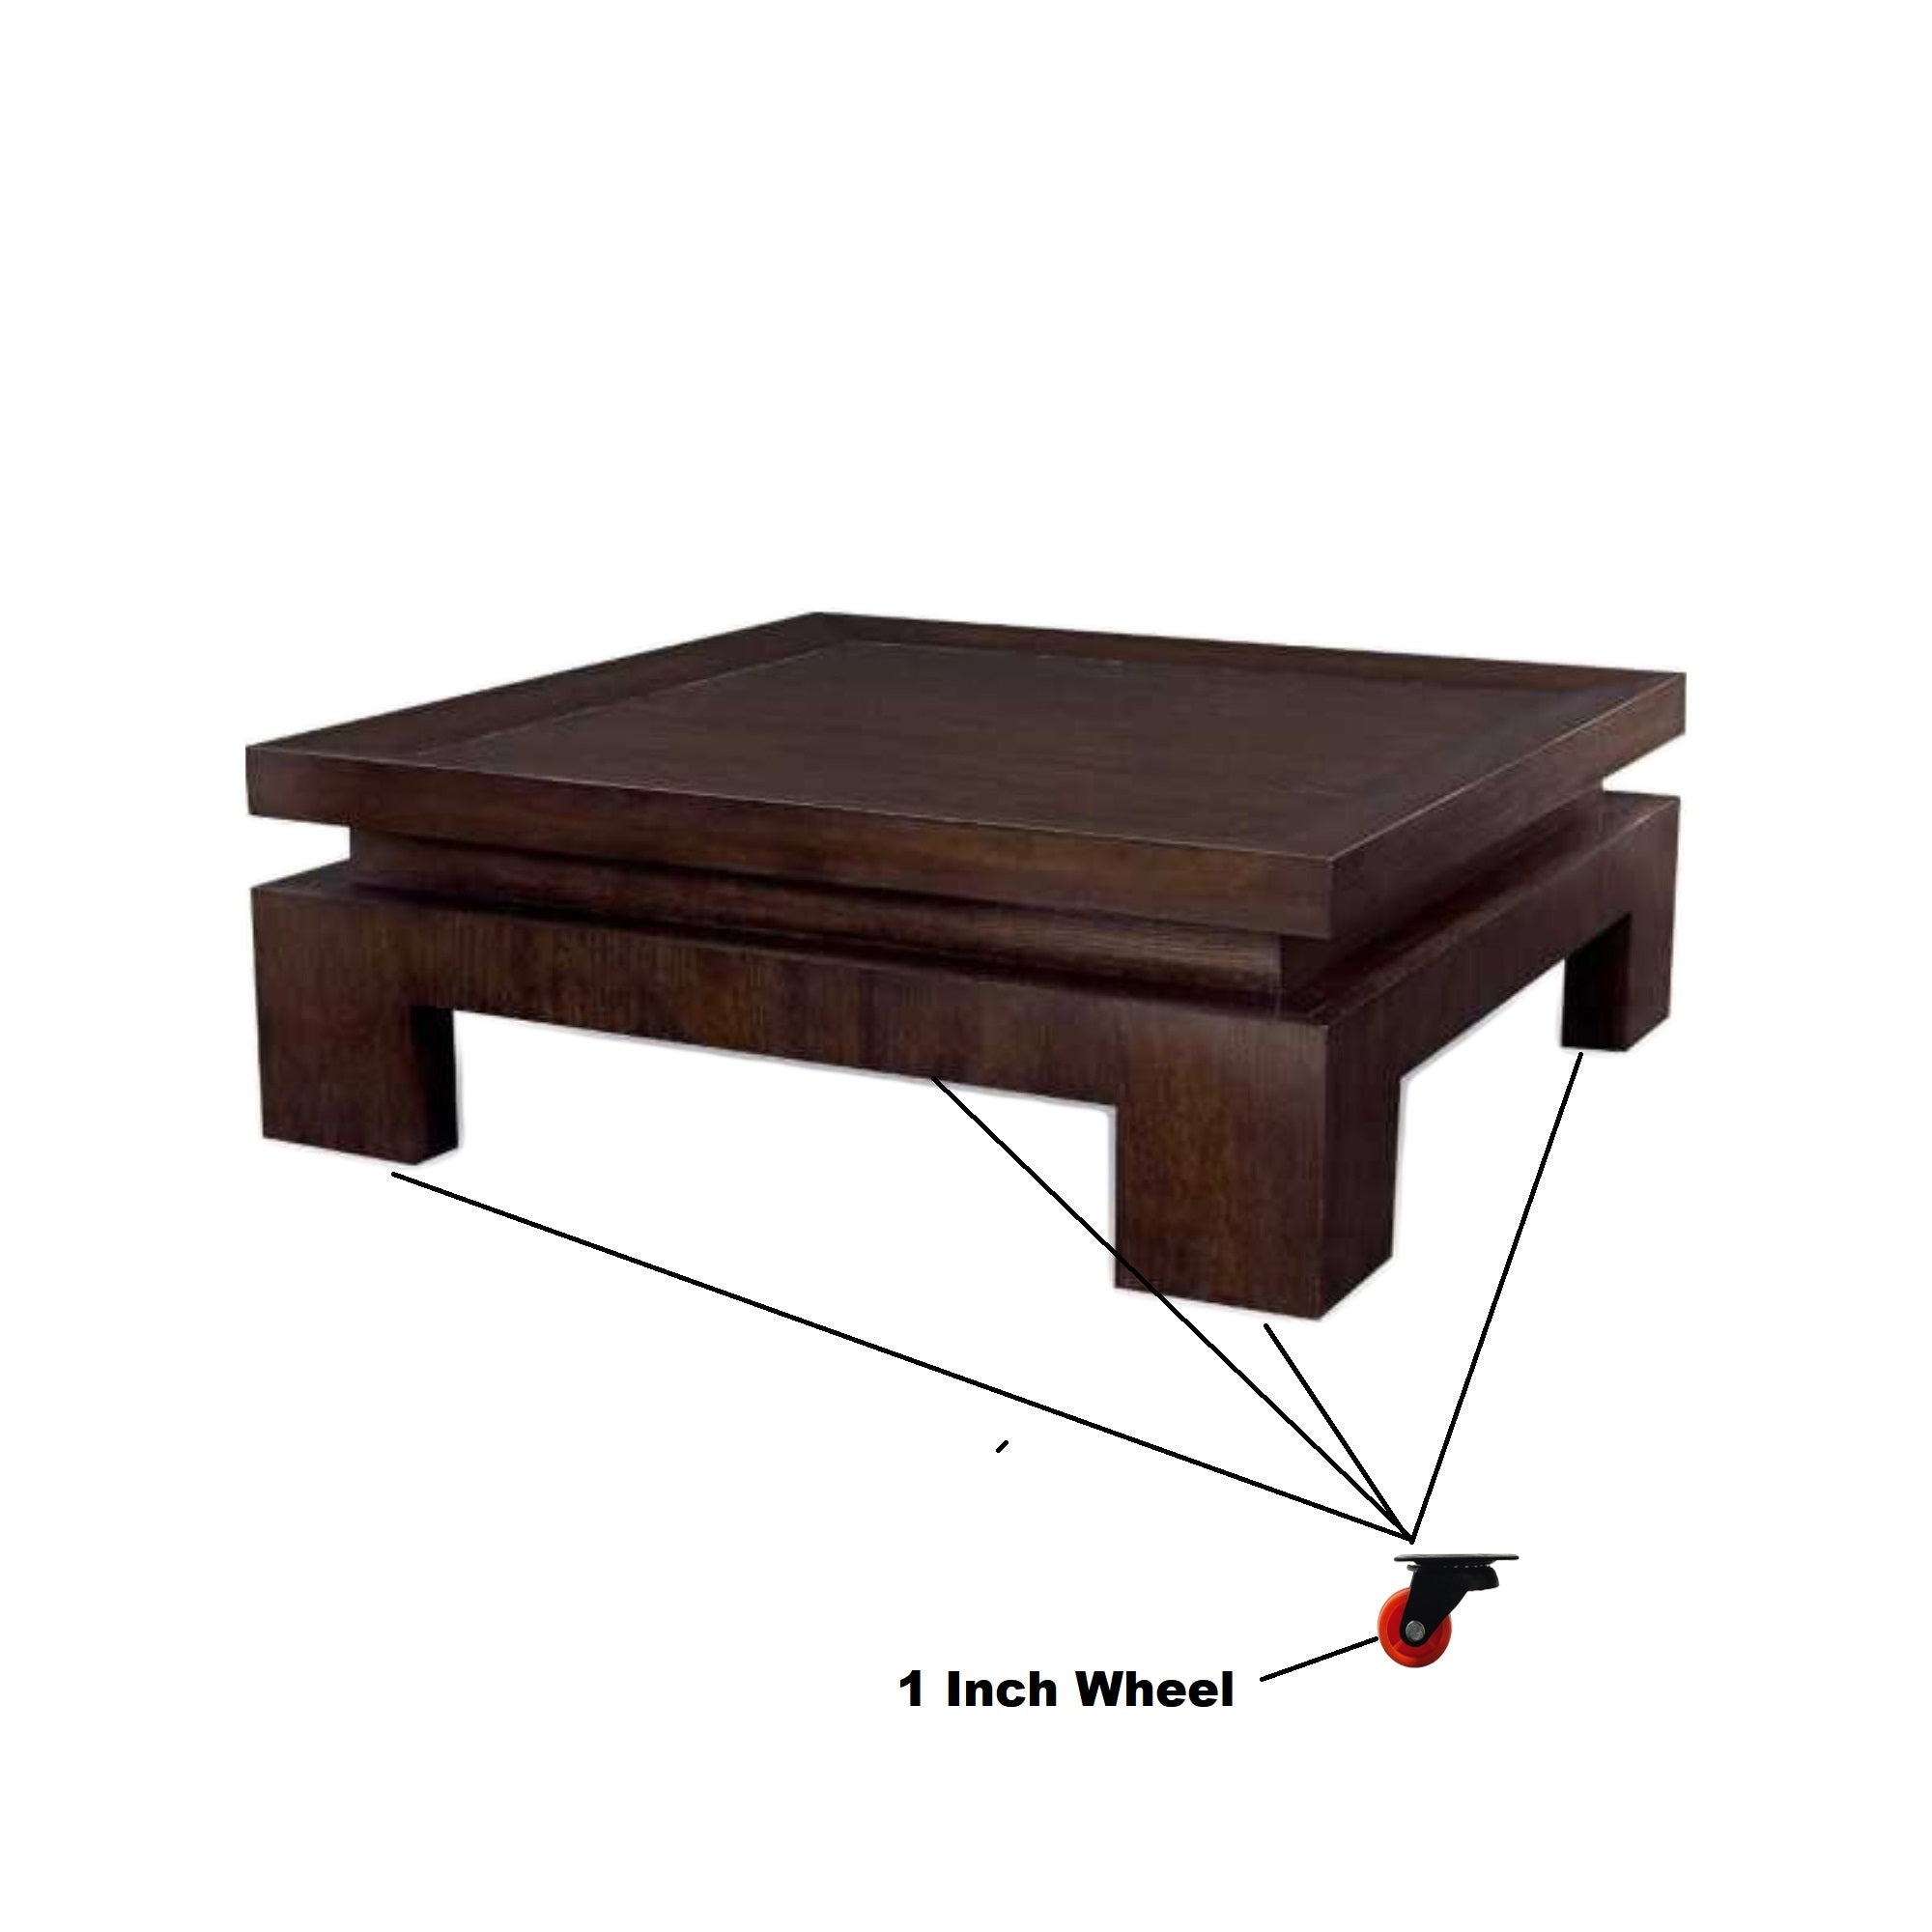 4 x Small 1" Single Wheel Puff Castor For Centre Table Furniture / 80kg Load Capicity/IMP-U17